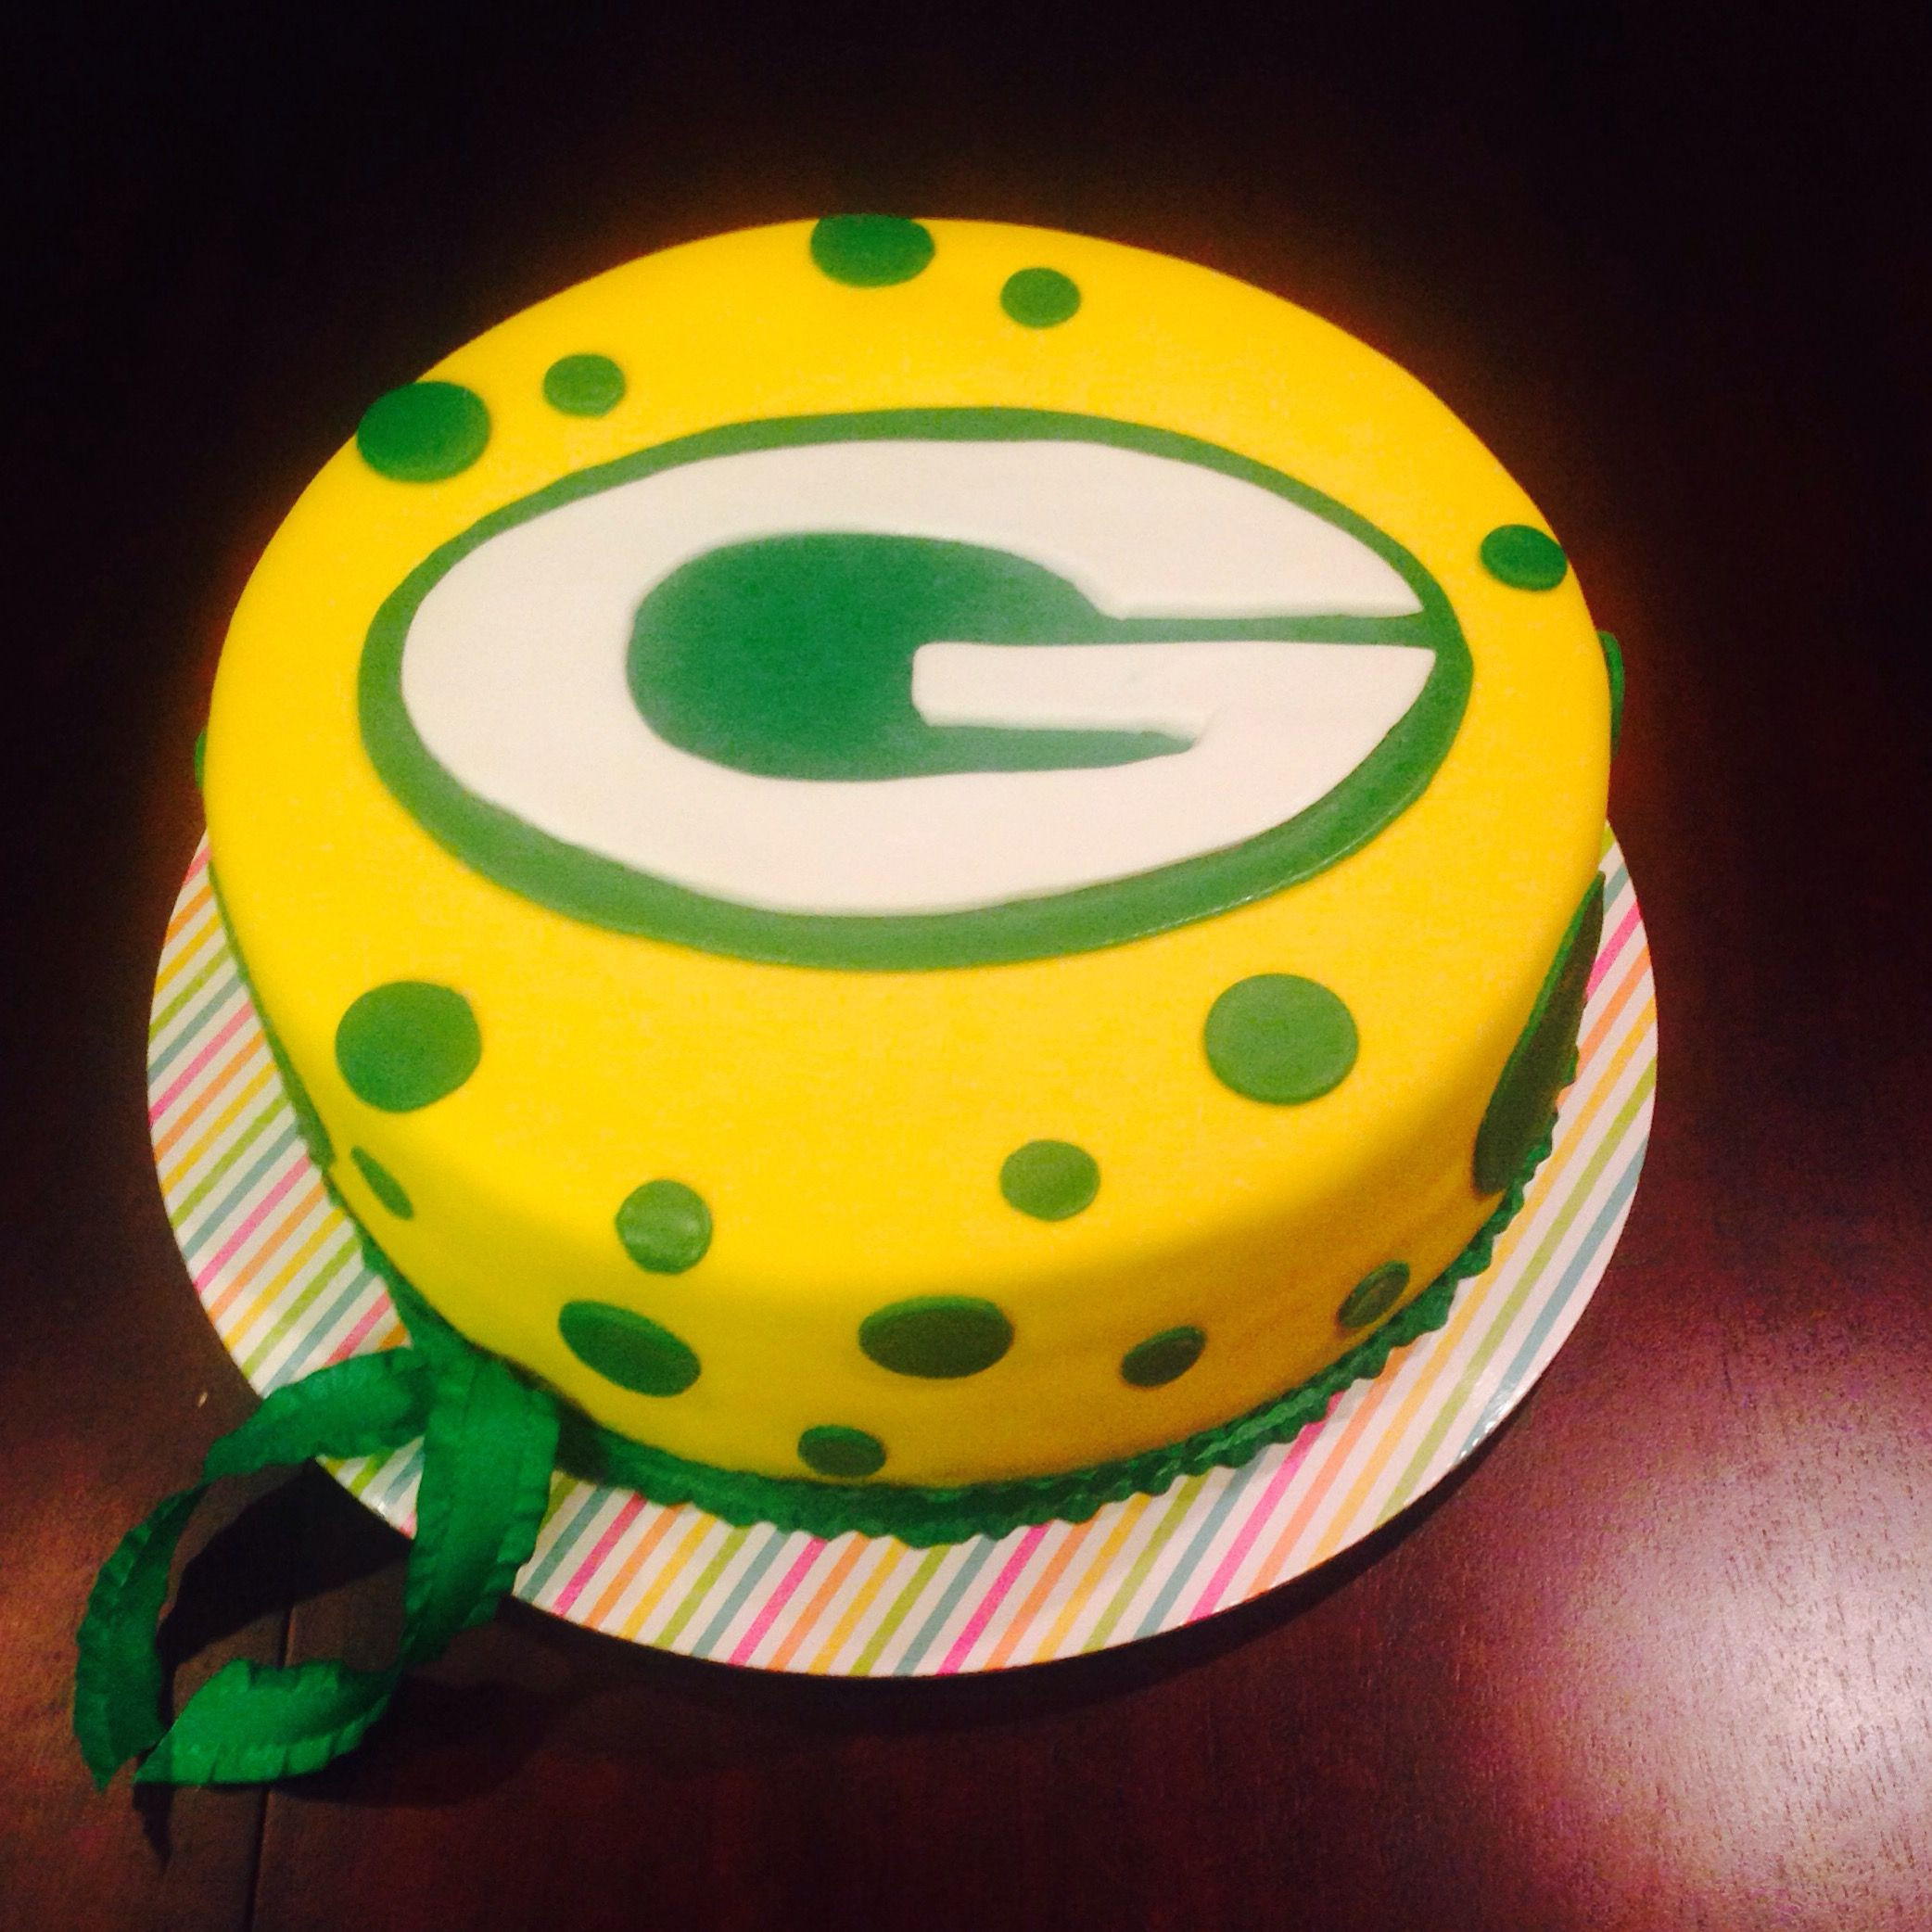 Green Bay Packers Birthday Cake
 Green Bay Packers cake